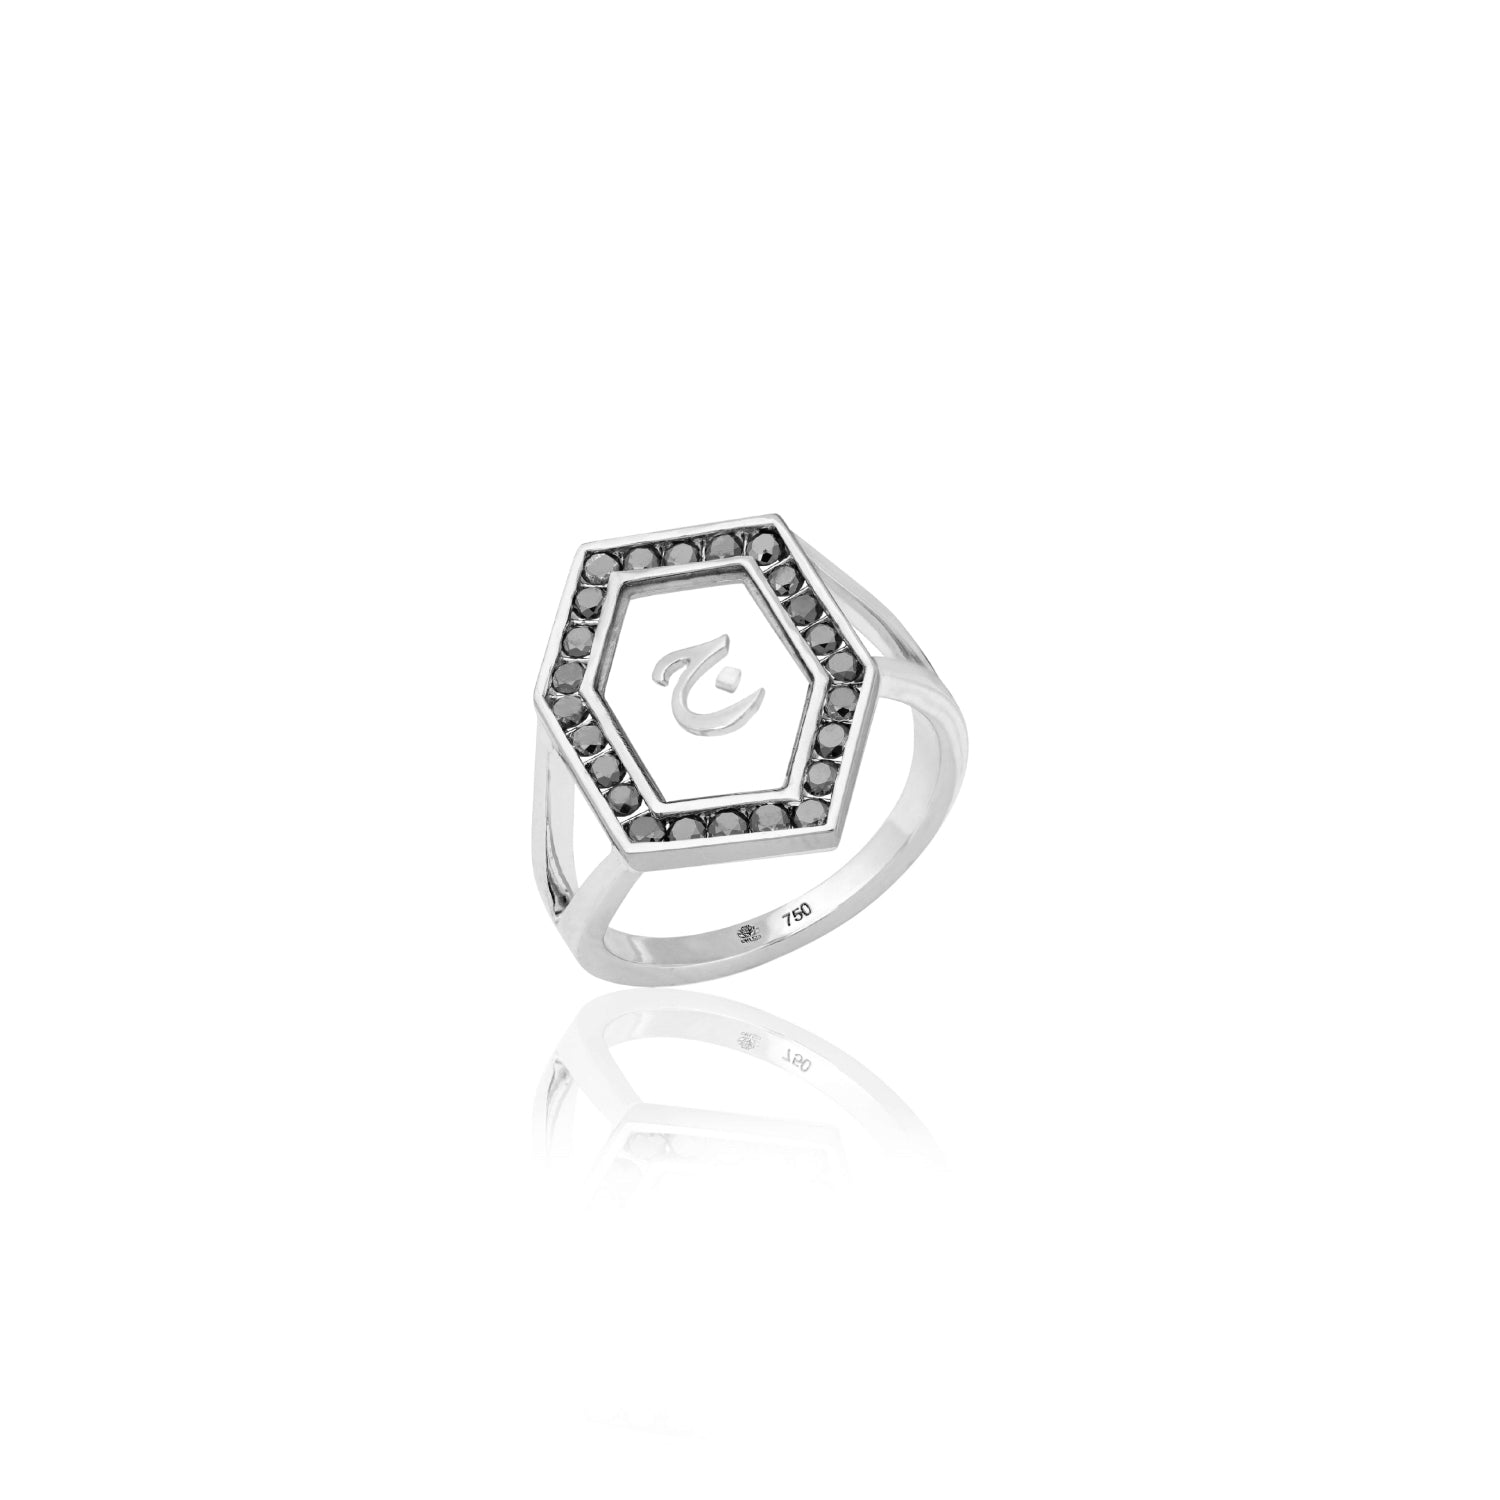 Qamoos 1.0 Letter ج Black Diamond Ring in White Gold